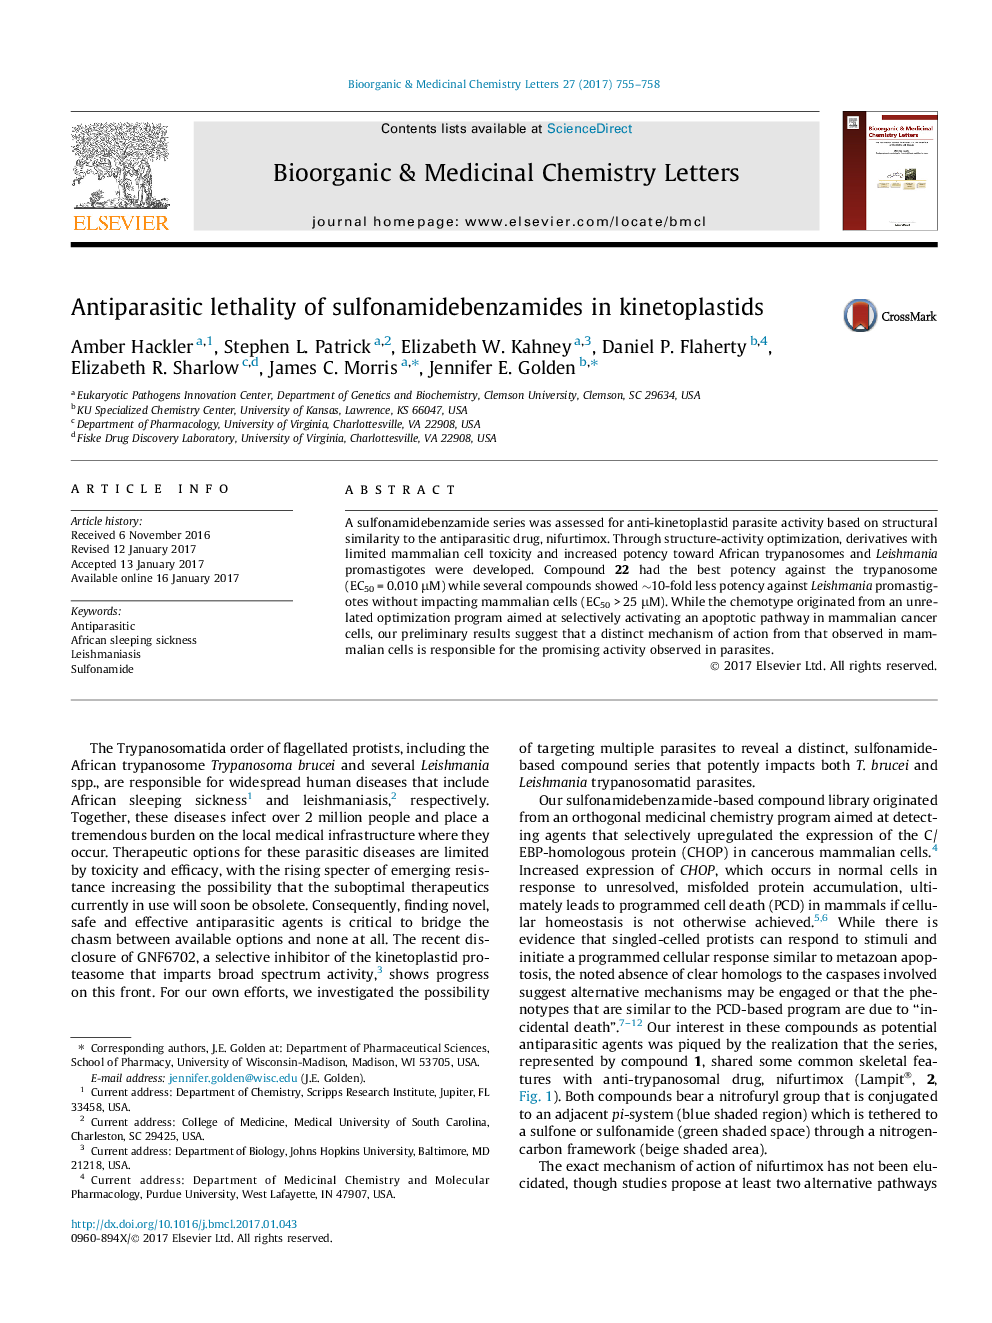 Antiparasitic lethality of sulfonamidebenzamides in kinetoplastids